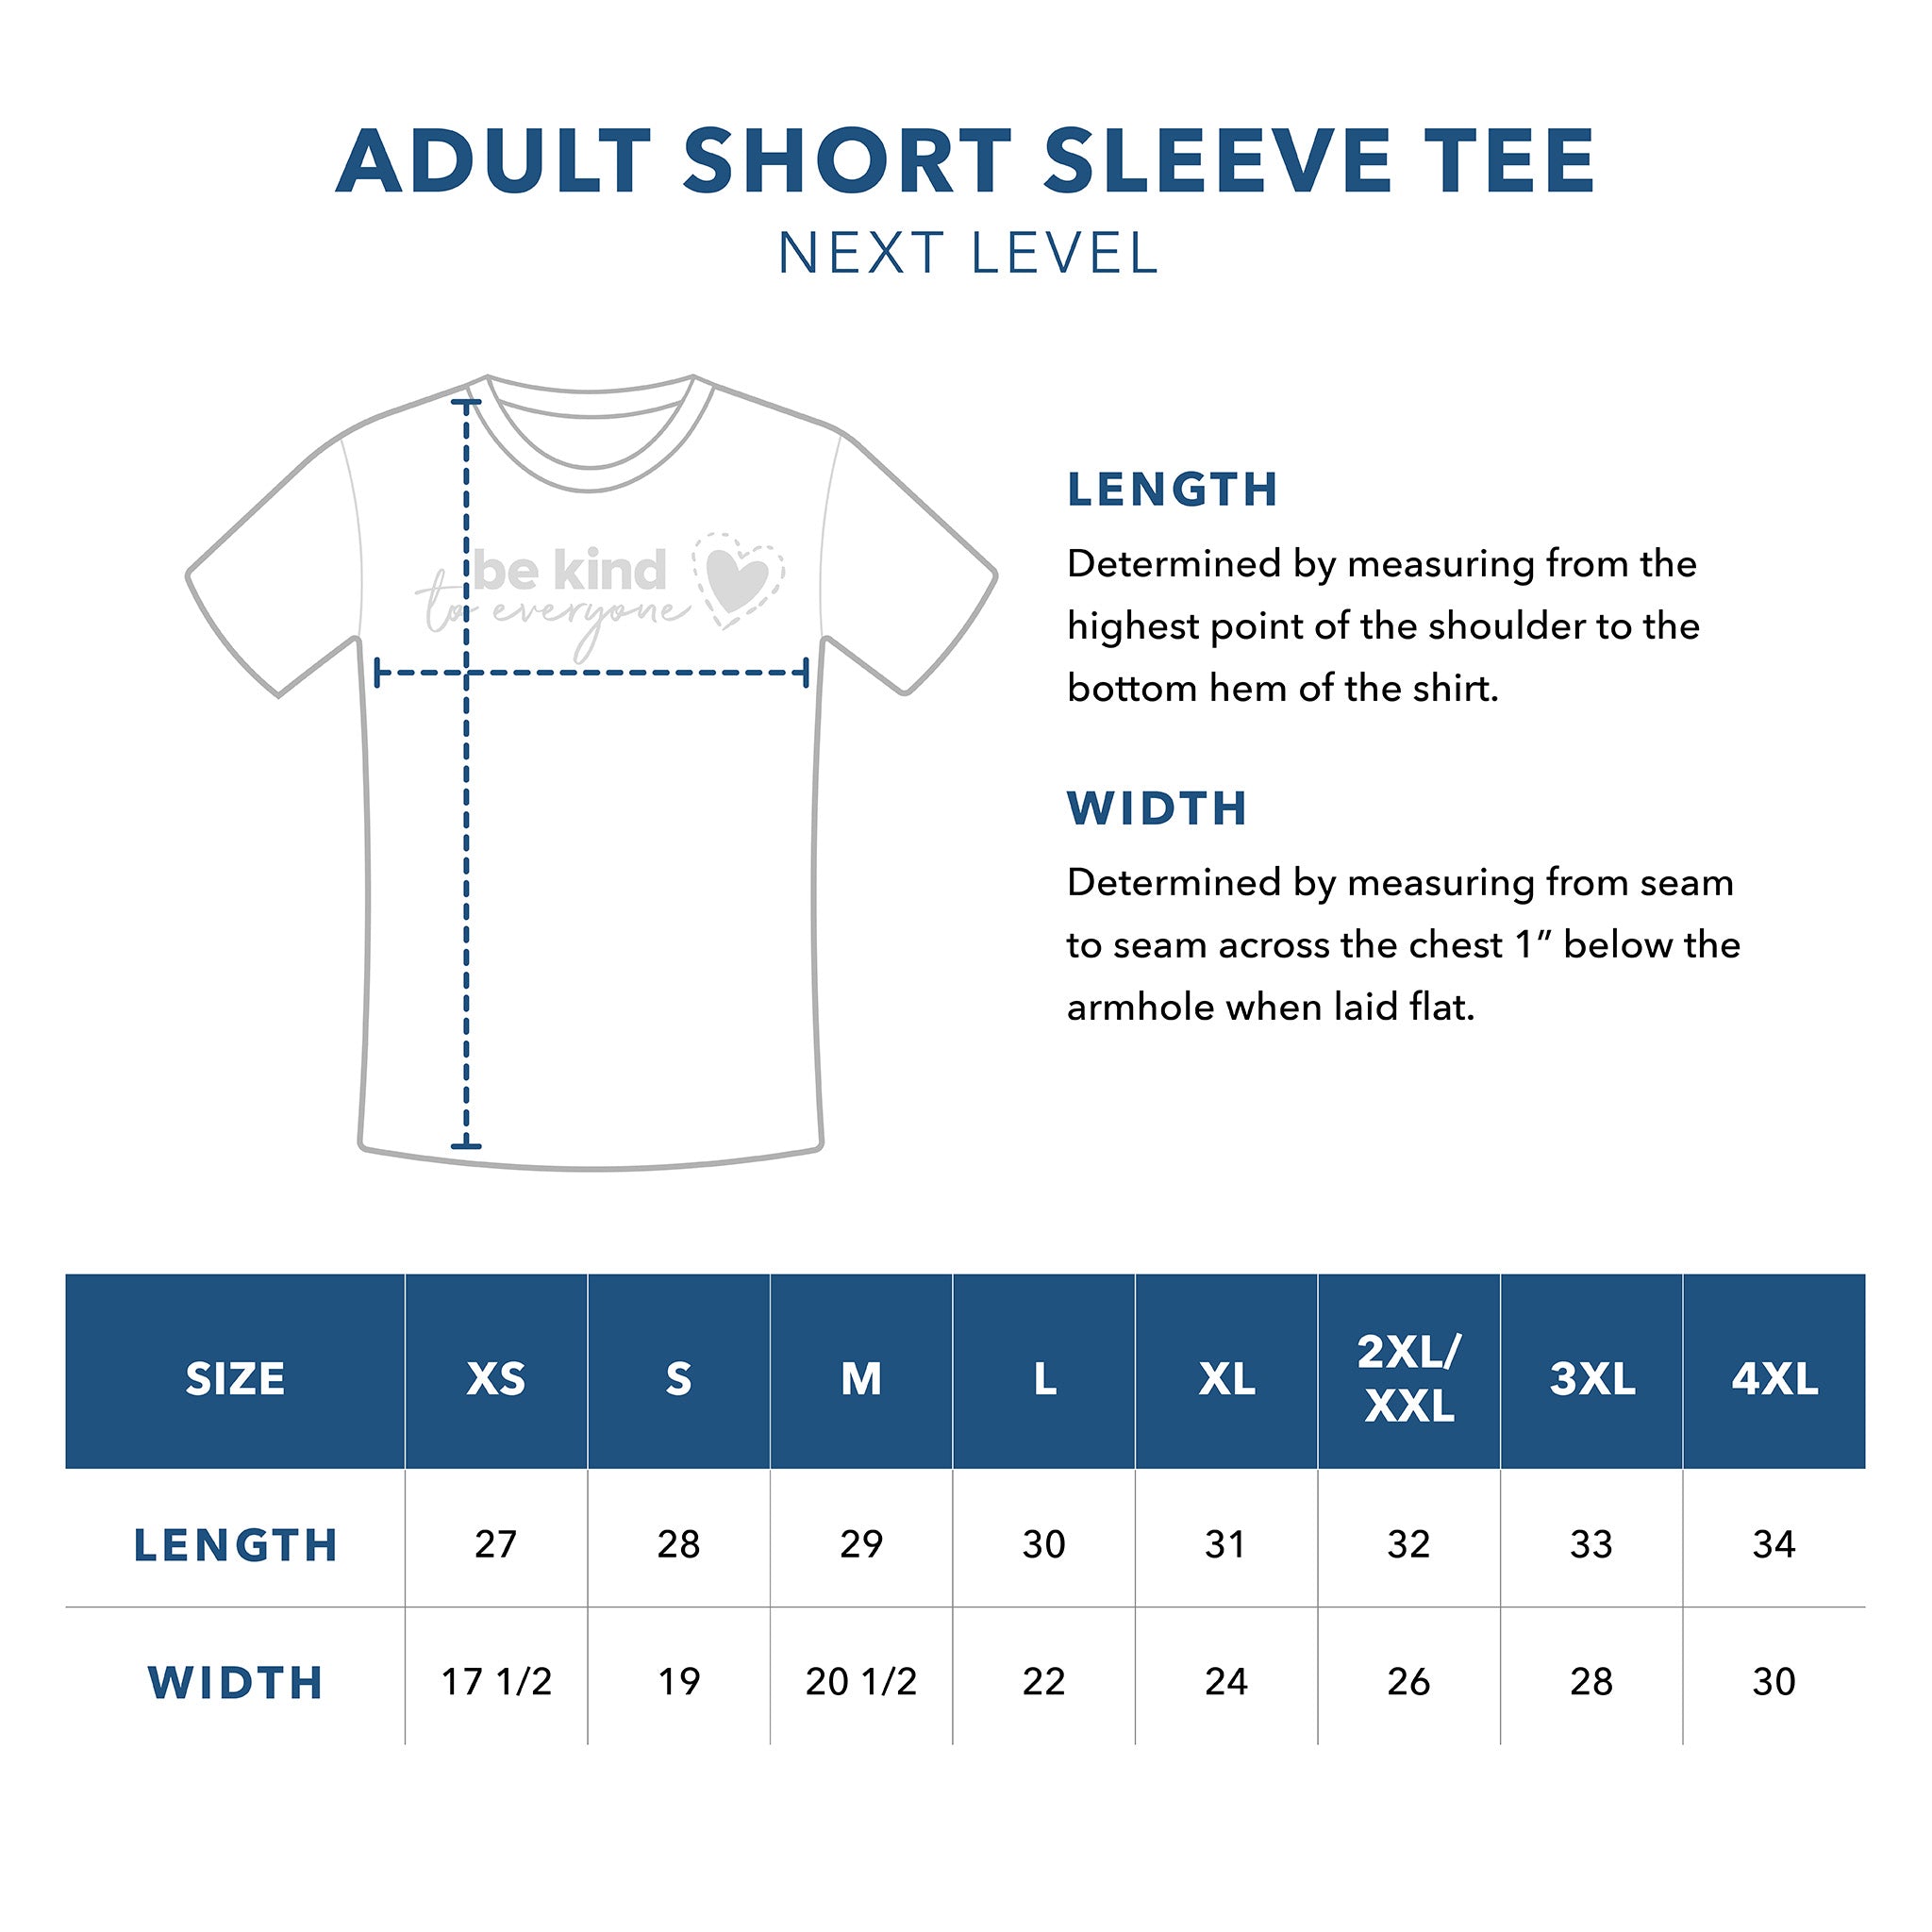 Adult Next Level Short Sleeve T-Shirt Sizing Guide